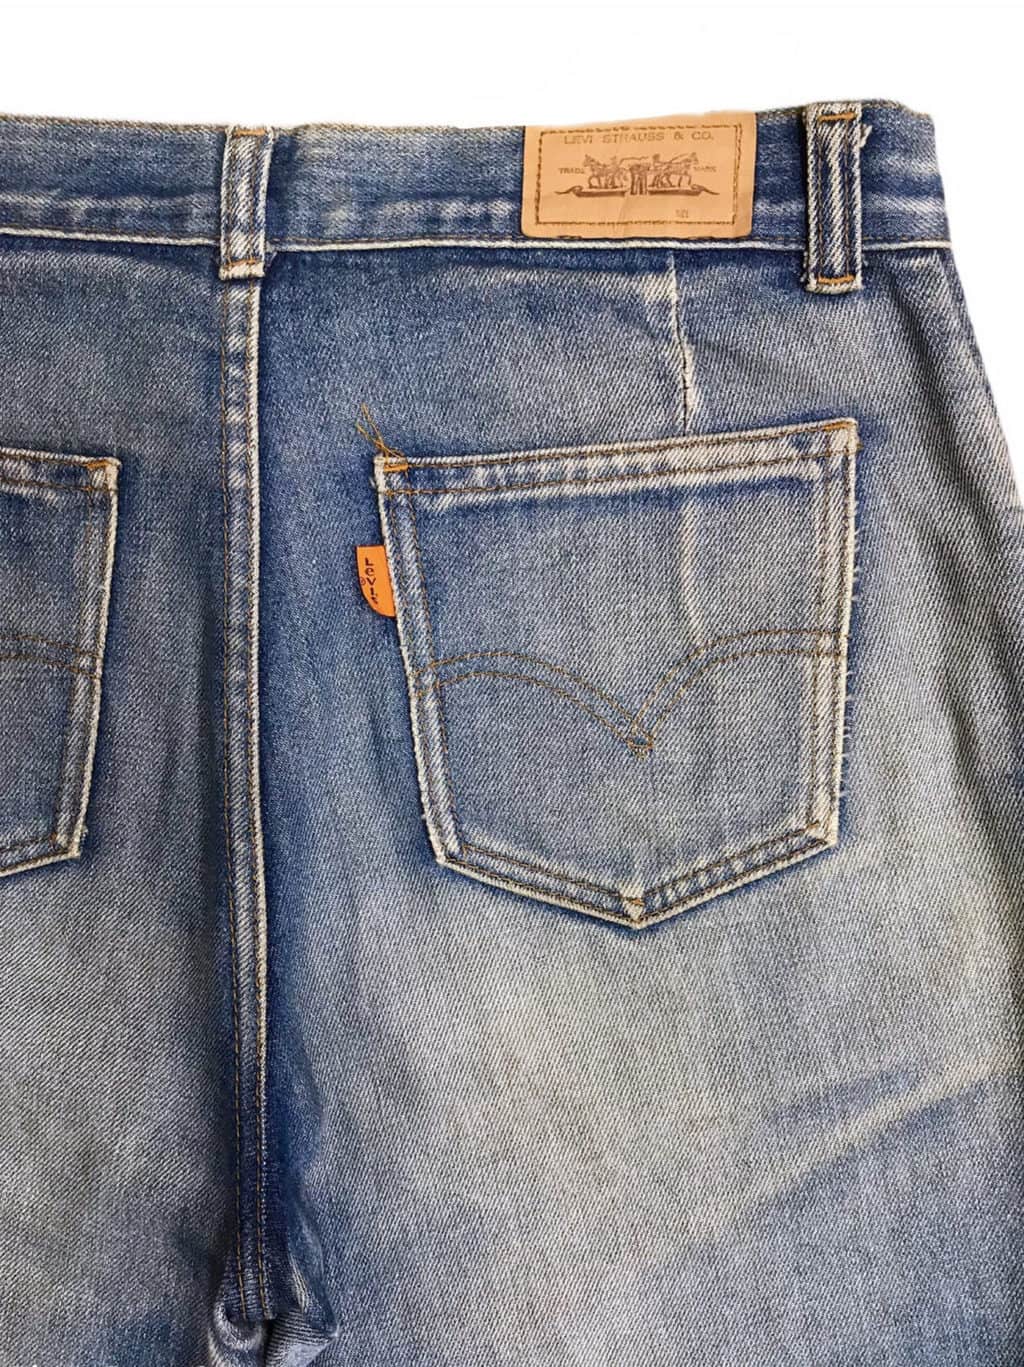 1970s Levis vintage jeans orange tab fade wash blue - W31 x L33 - St ...